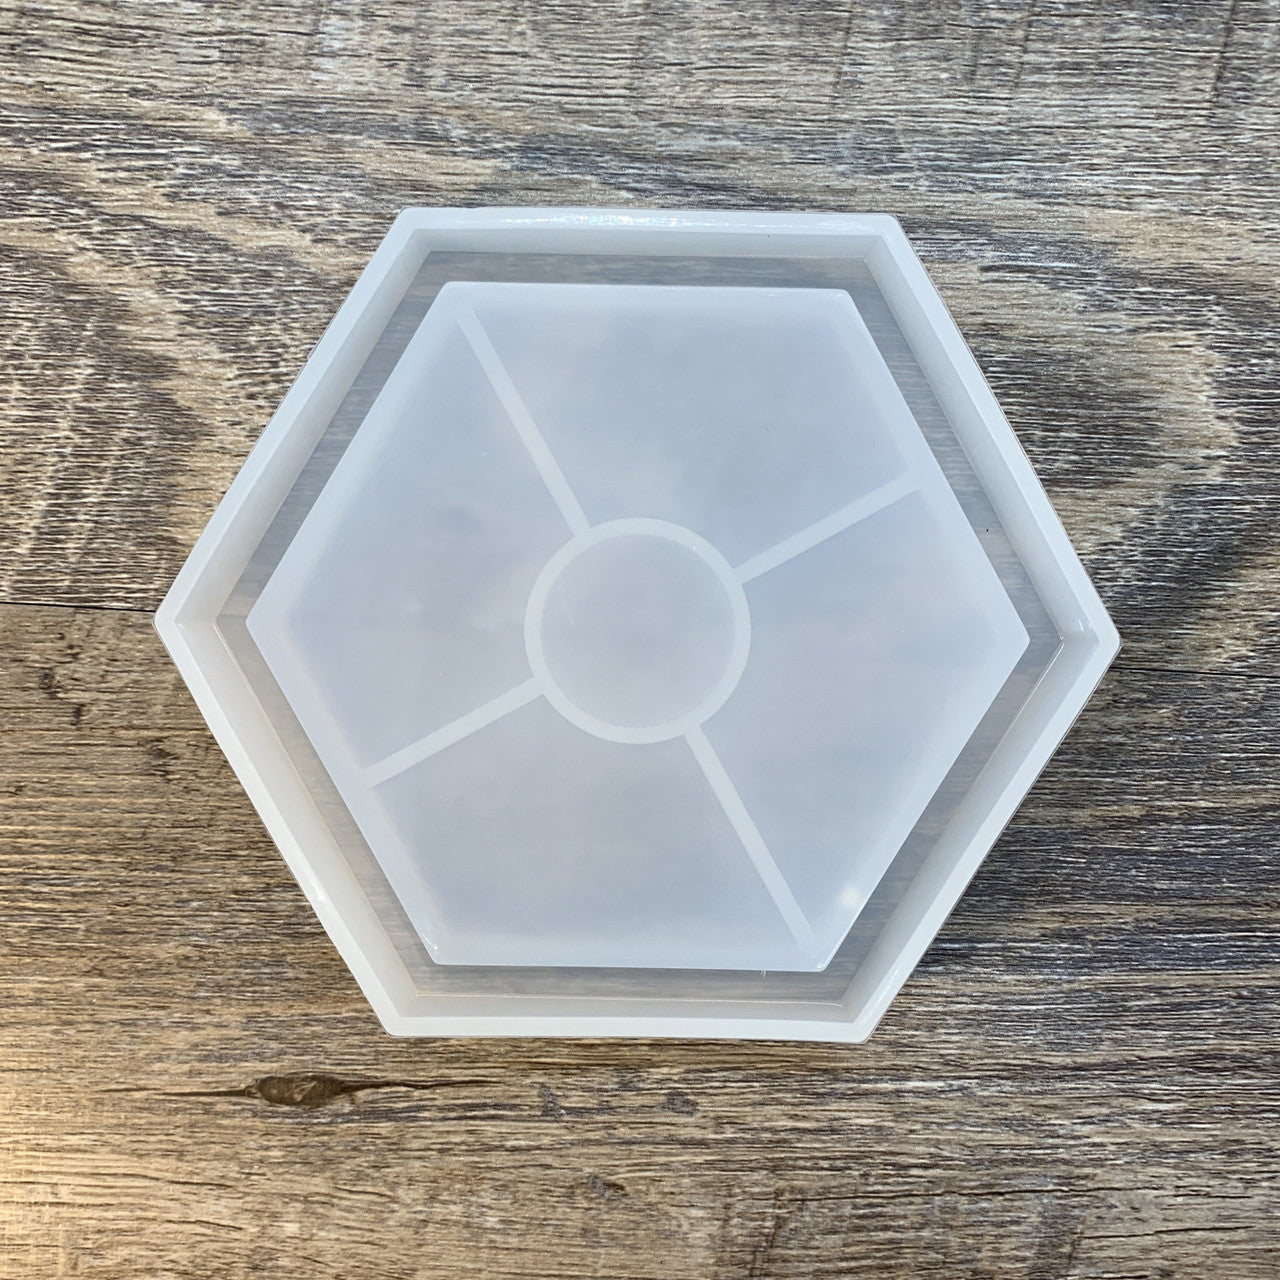 Hexagon Petri Dish Coaster Transparent Silicone Mold for Epoxy Resin Art